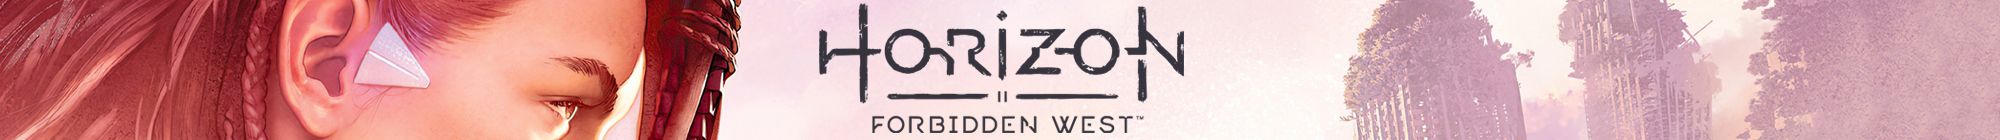 horizon-forbidden-west-complete-guide-00x-banner